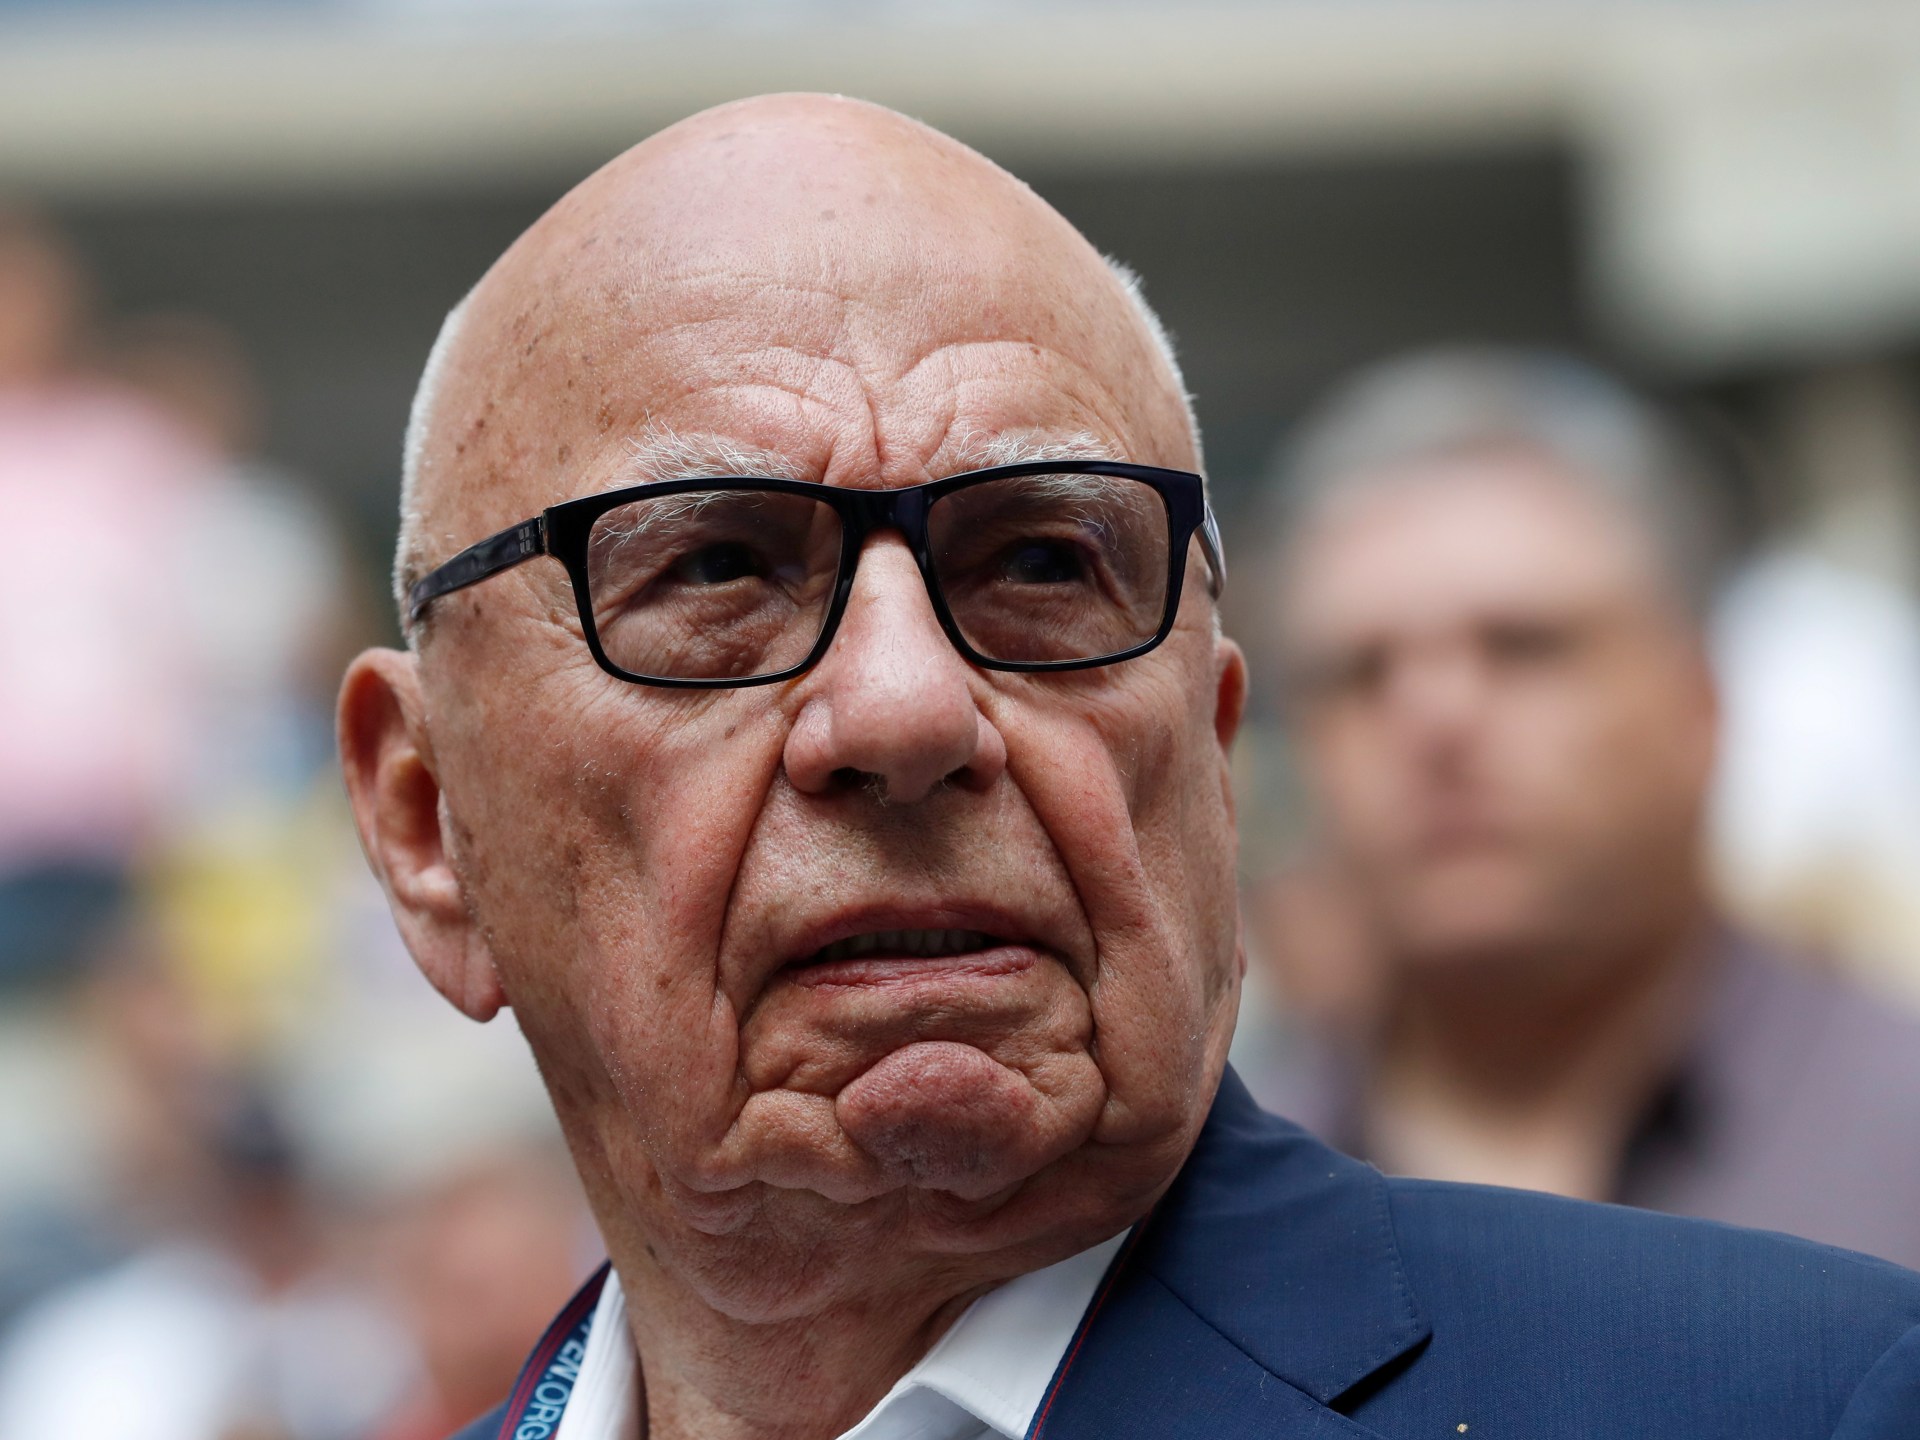 Fox chief Rupert Murdoch to be deposed in Dominion defamation